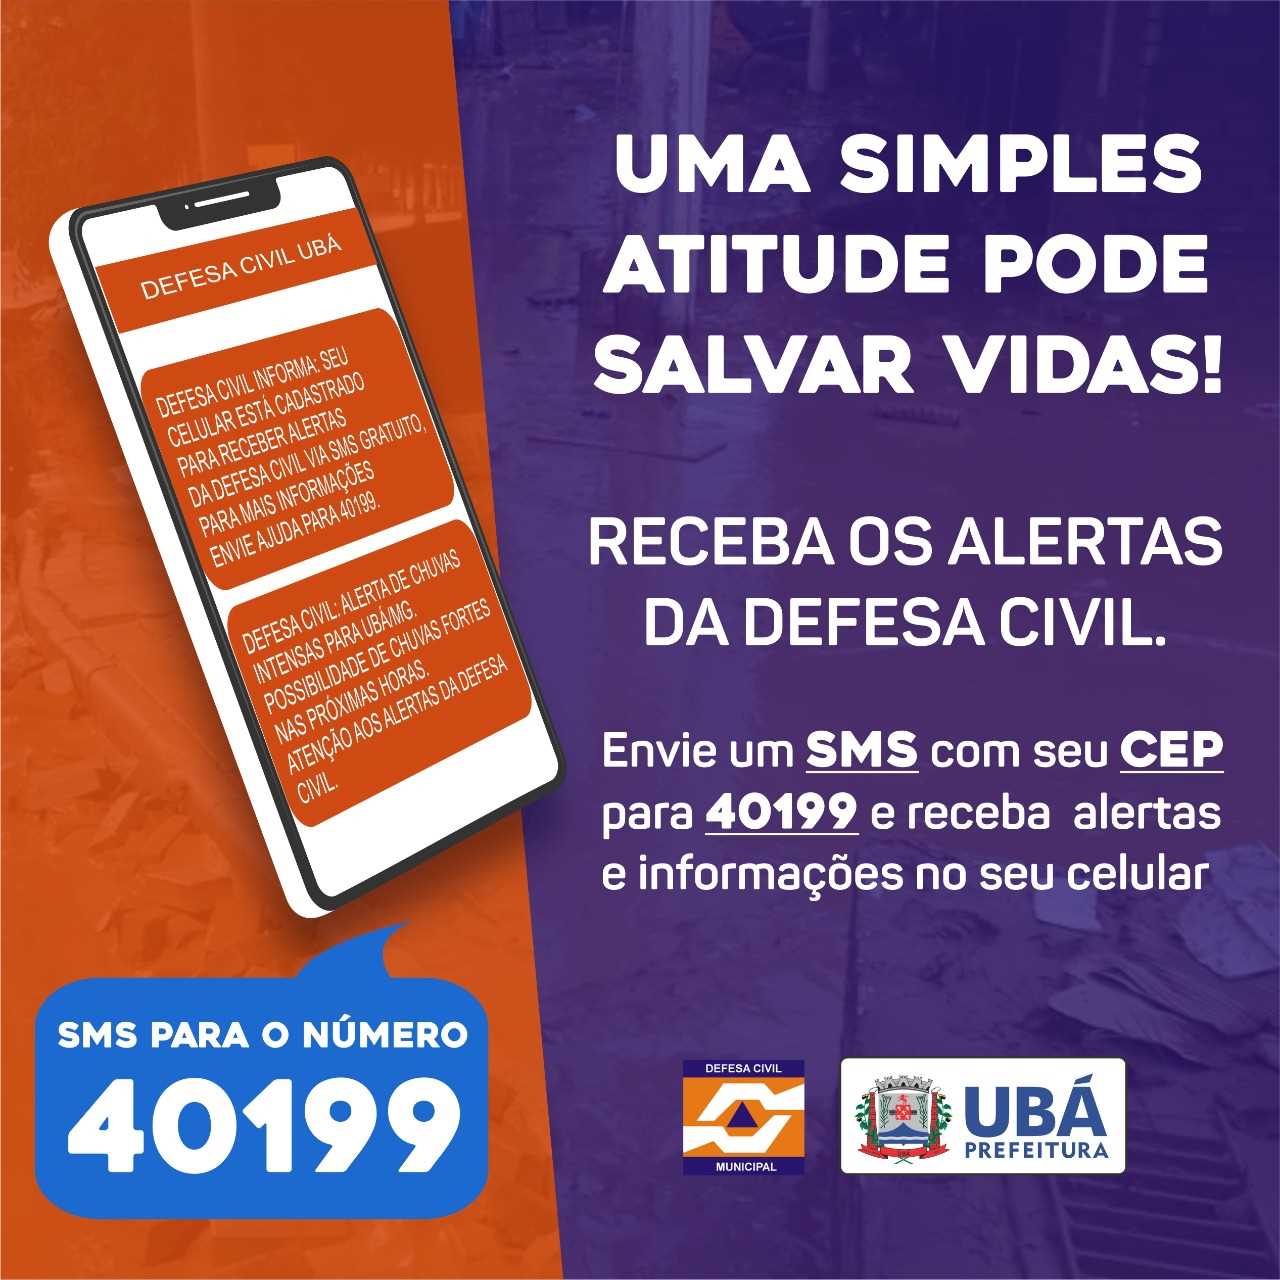 Prefeitura Municipal de Ubá Defesa Civil oferece SMS gratuito de alerta de riscos